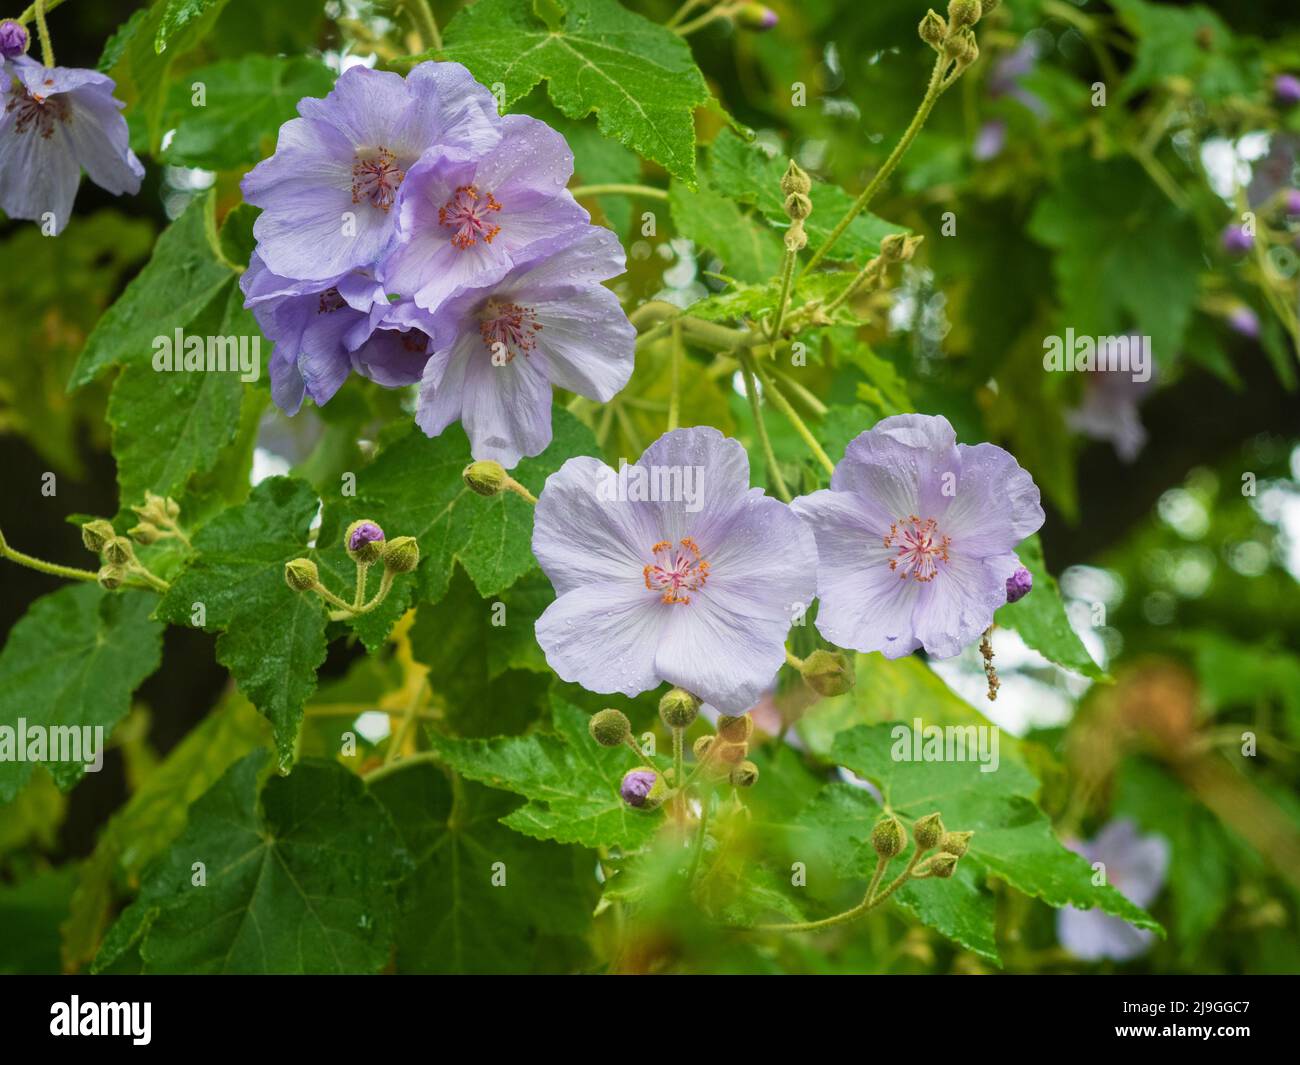 Delicate fioriture blu pallido dei primi mesi d'estate dell'arbusto deciduo d'acero fiorito, Abutilon vitifolium Foto Stock